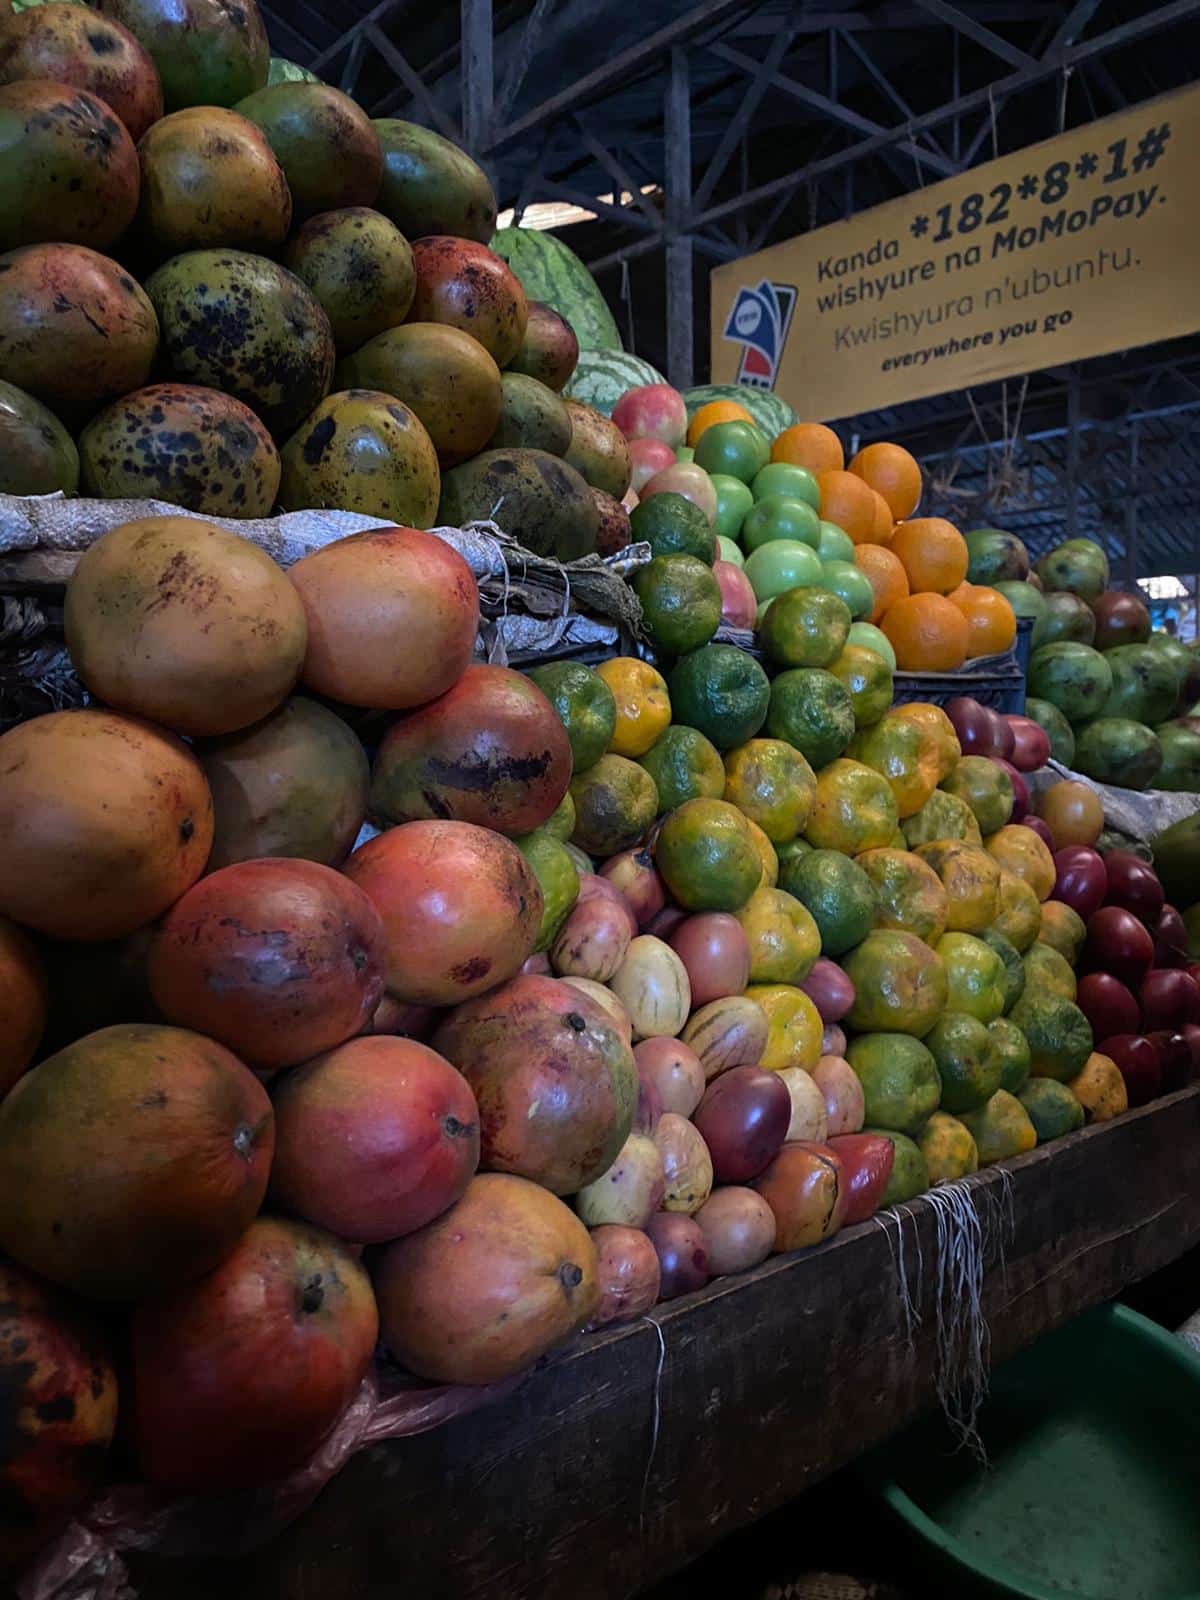 Kimironko tržnica kod voća